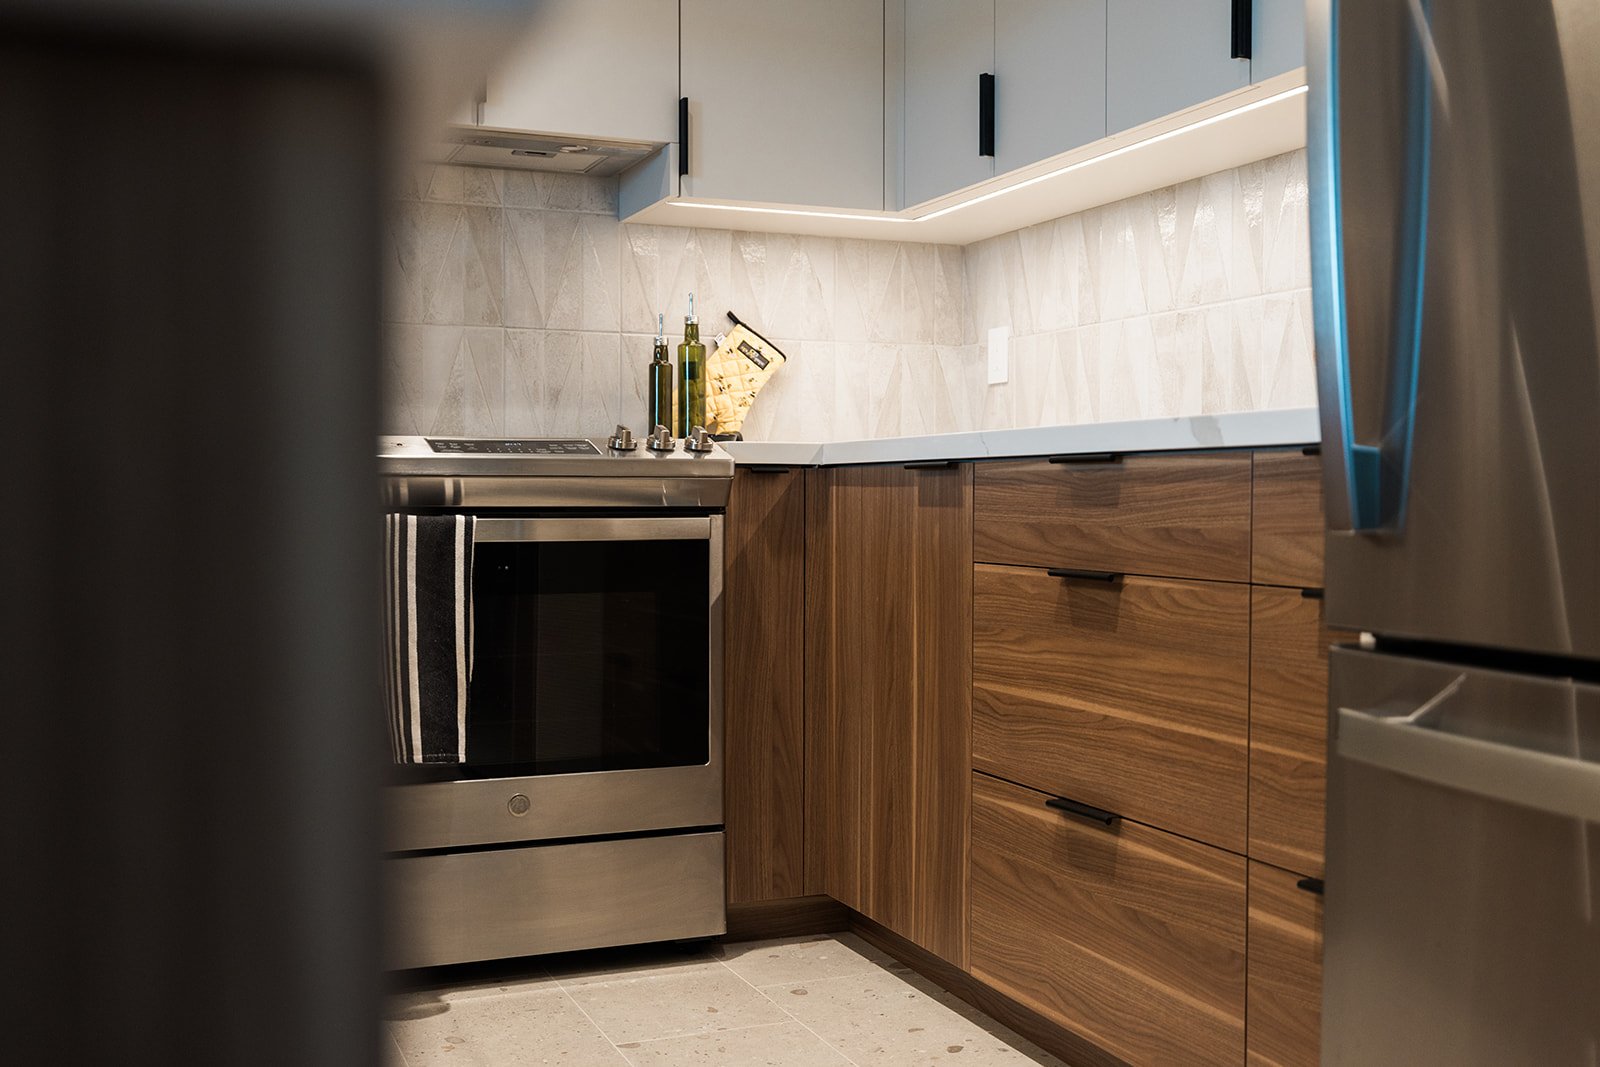 Flat panel modern wood cabinets in GTA condo kitchen renovation